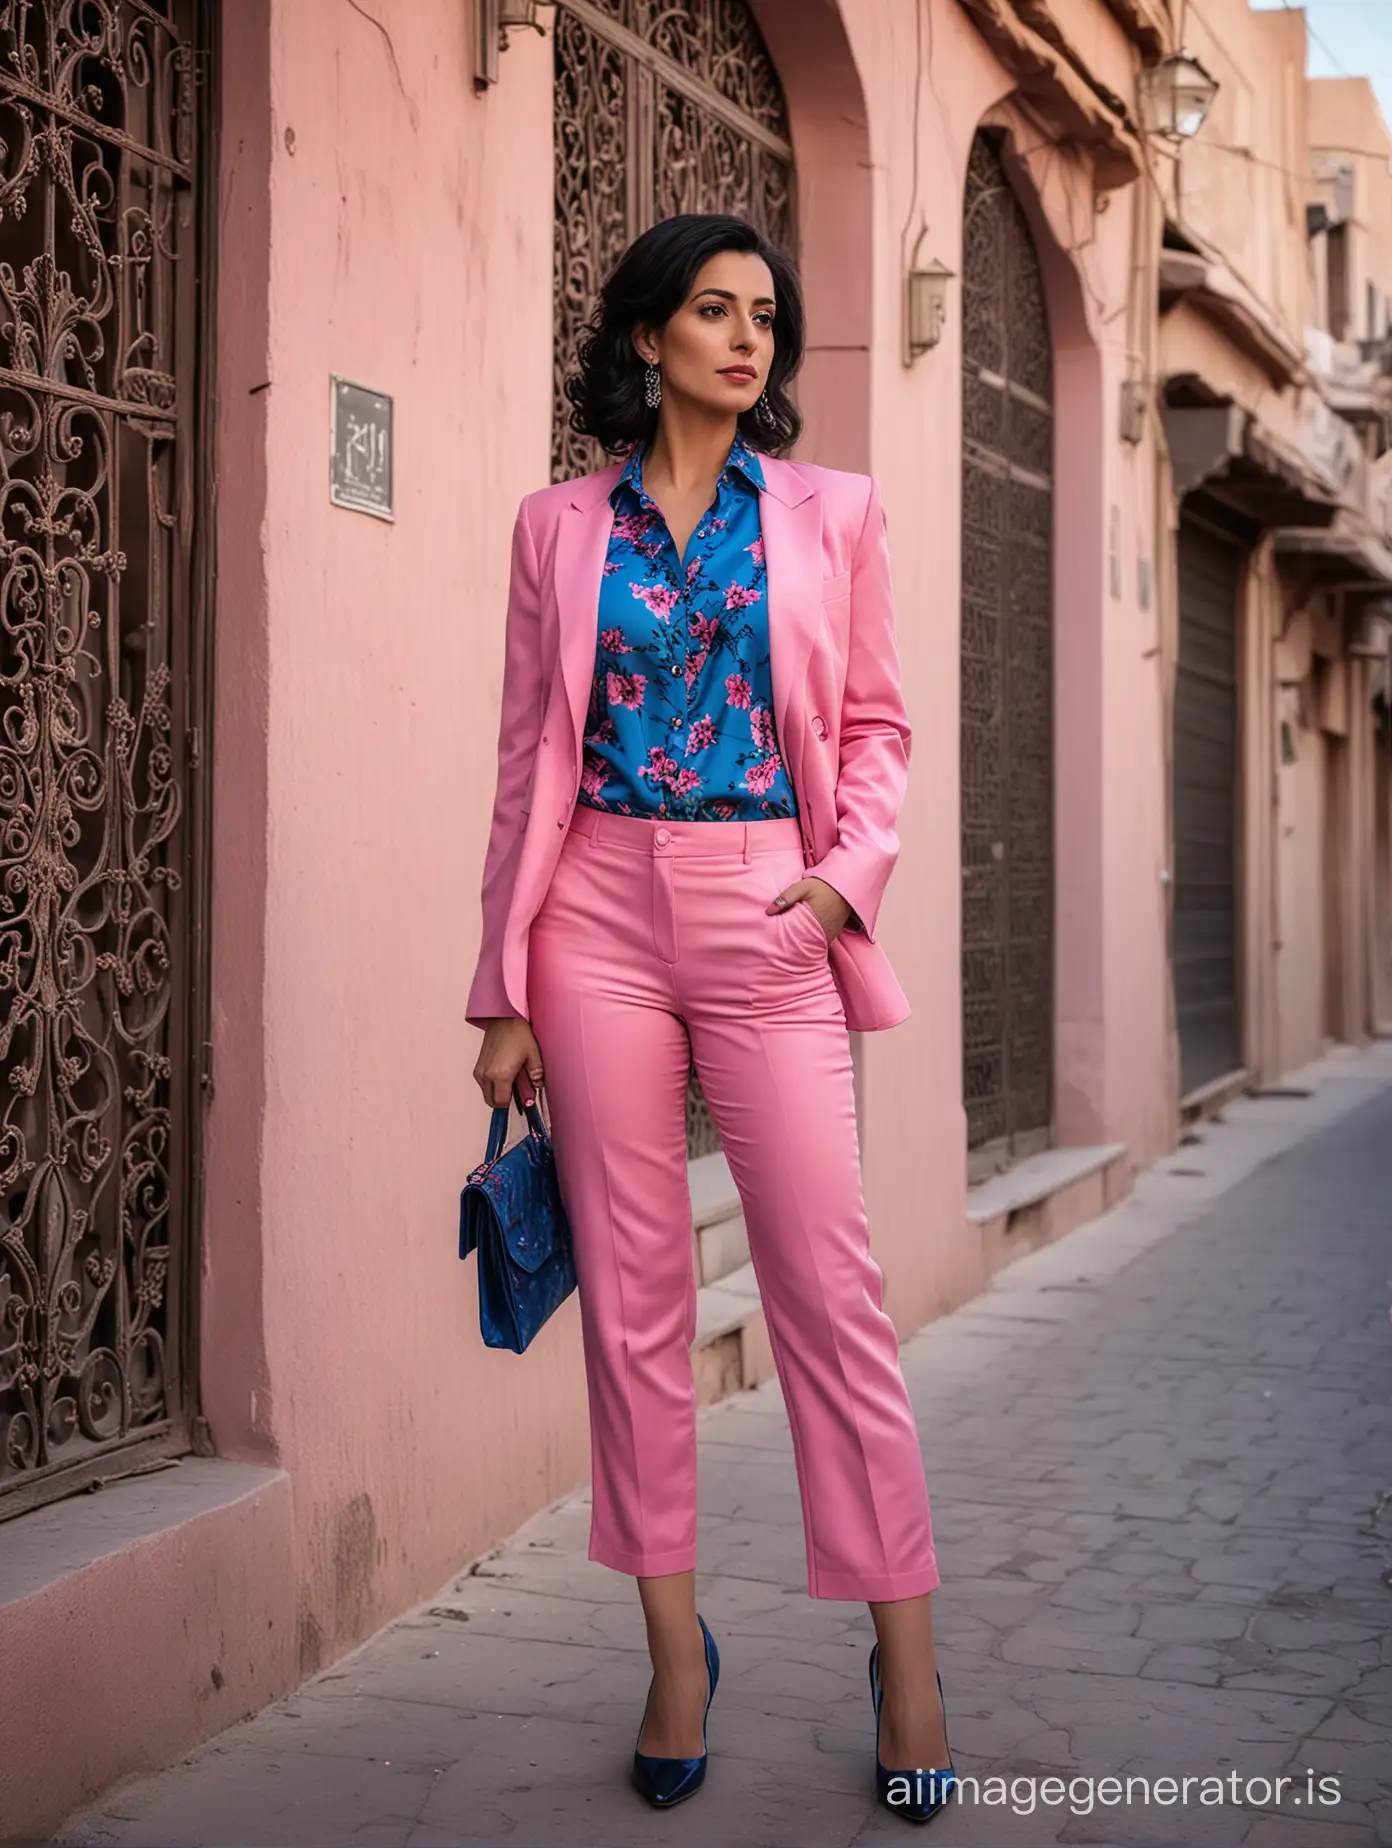 Iranian woman 40  years old, pink suits with blue flower pattern, blue shirt, white high heels , black hair, full body shot, pink lipsticks, in Kashan street, dramatic lighting